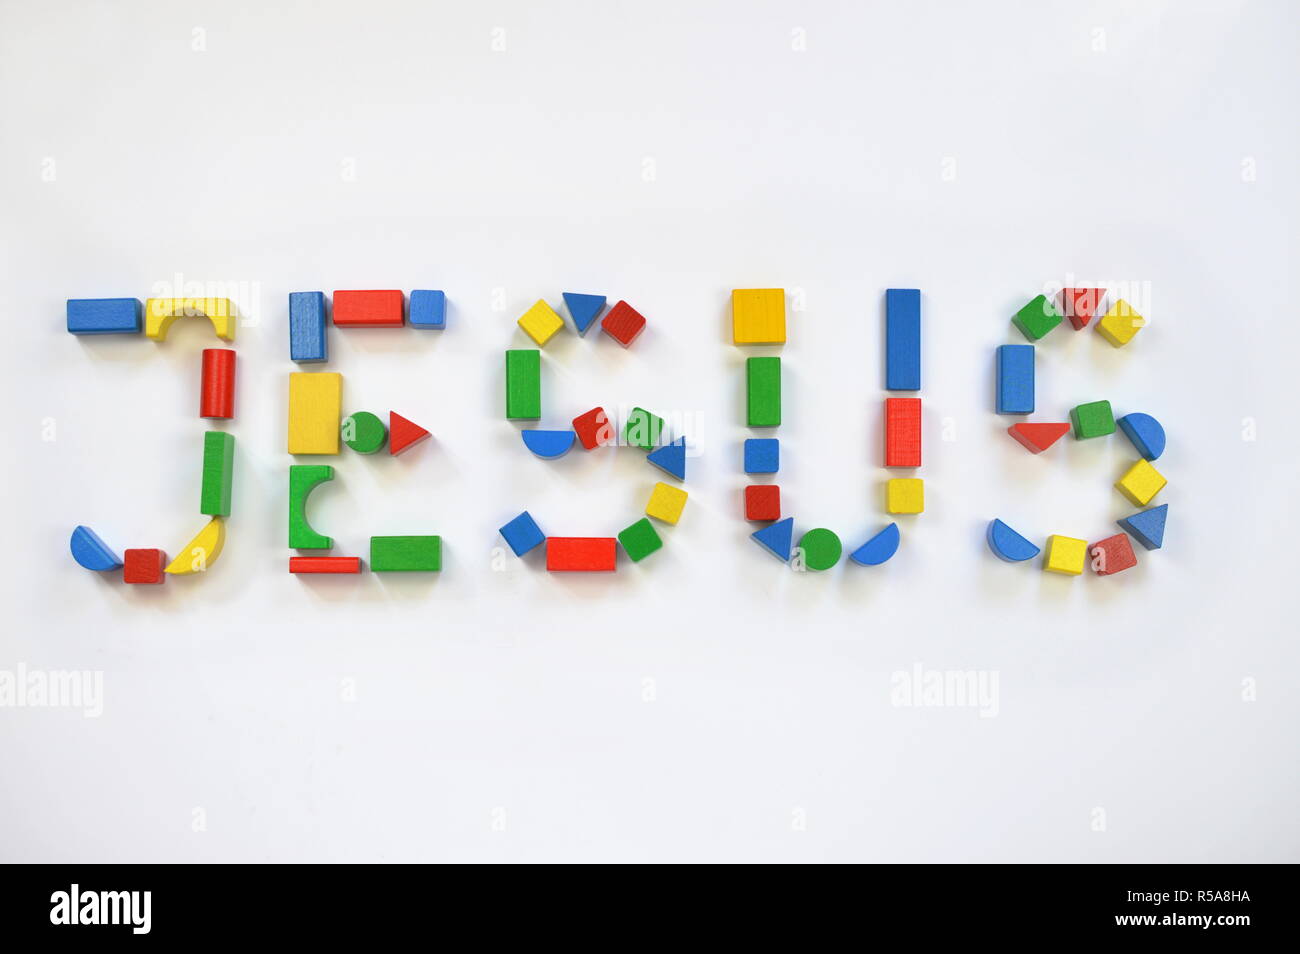 jesus u200bu200bcomposed of colorful wooden bricks Stock Photo